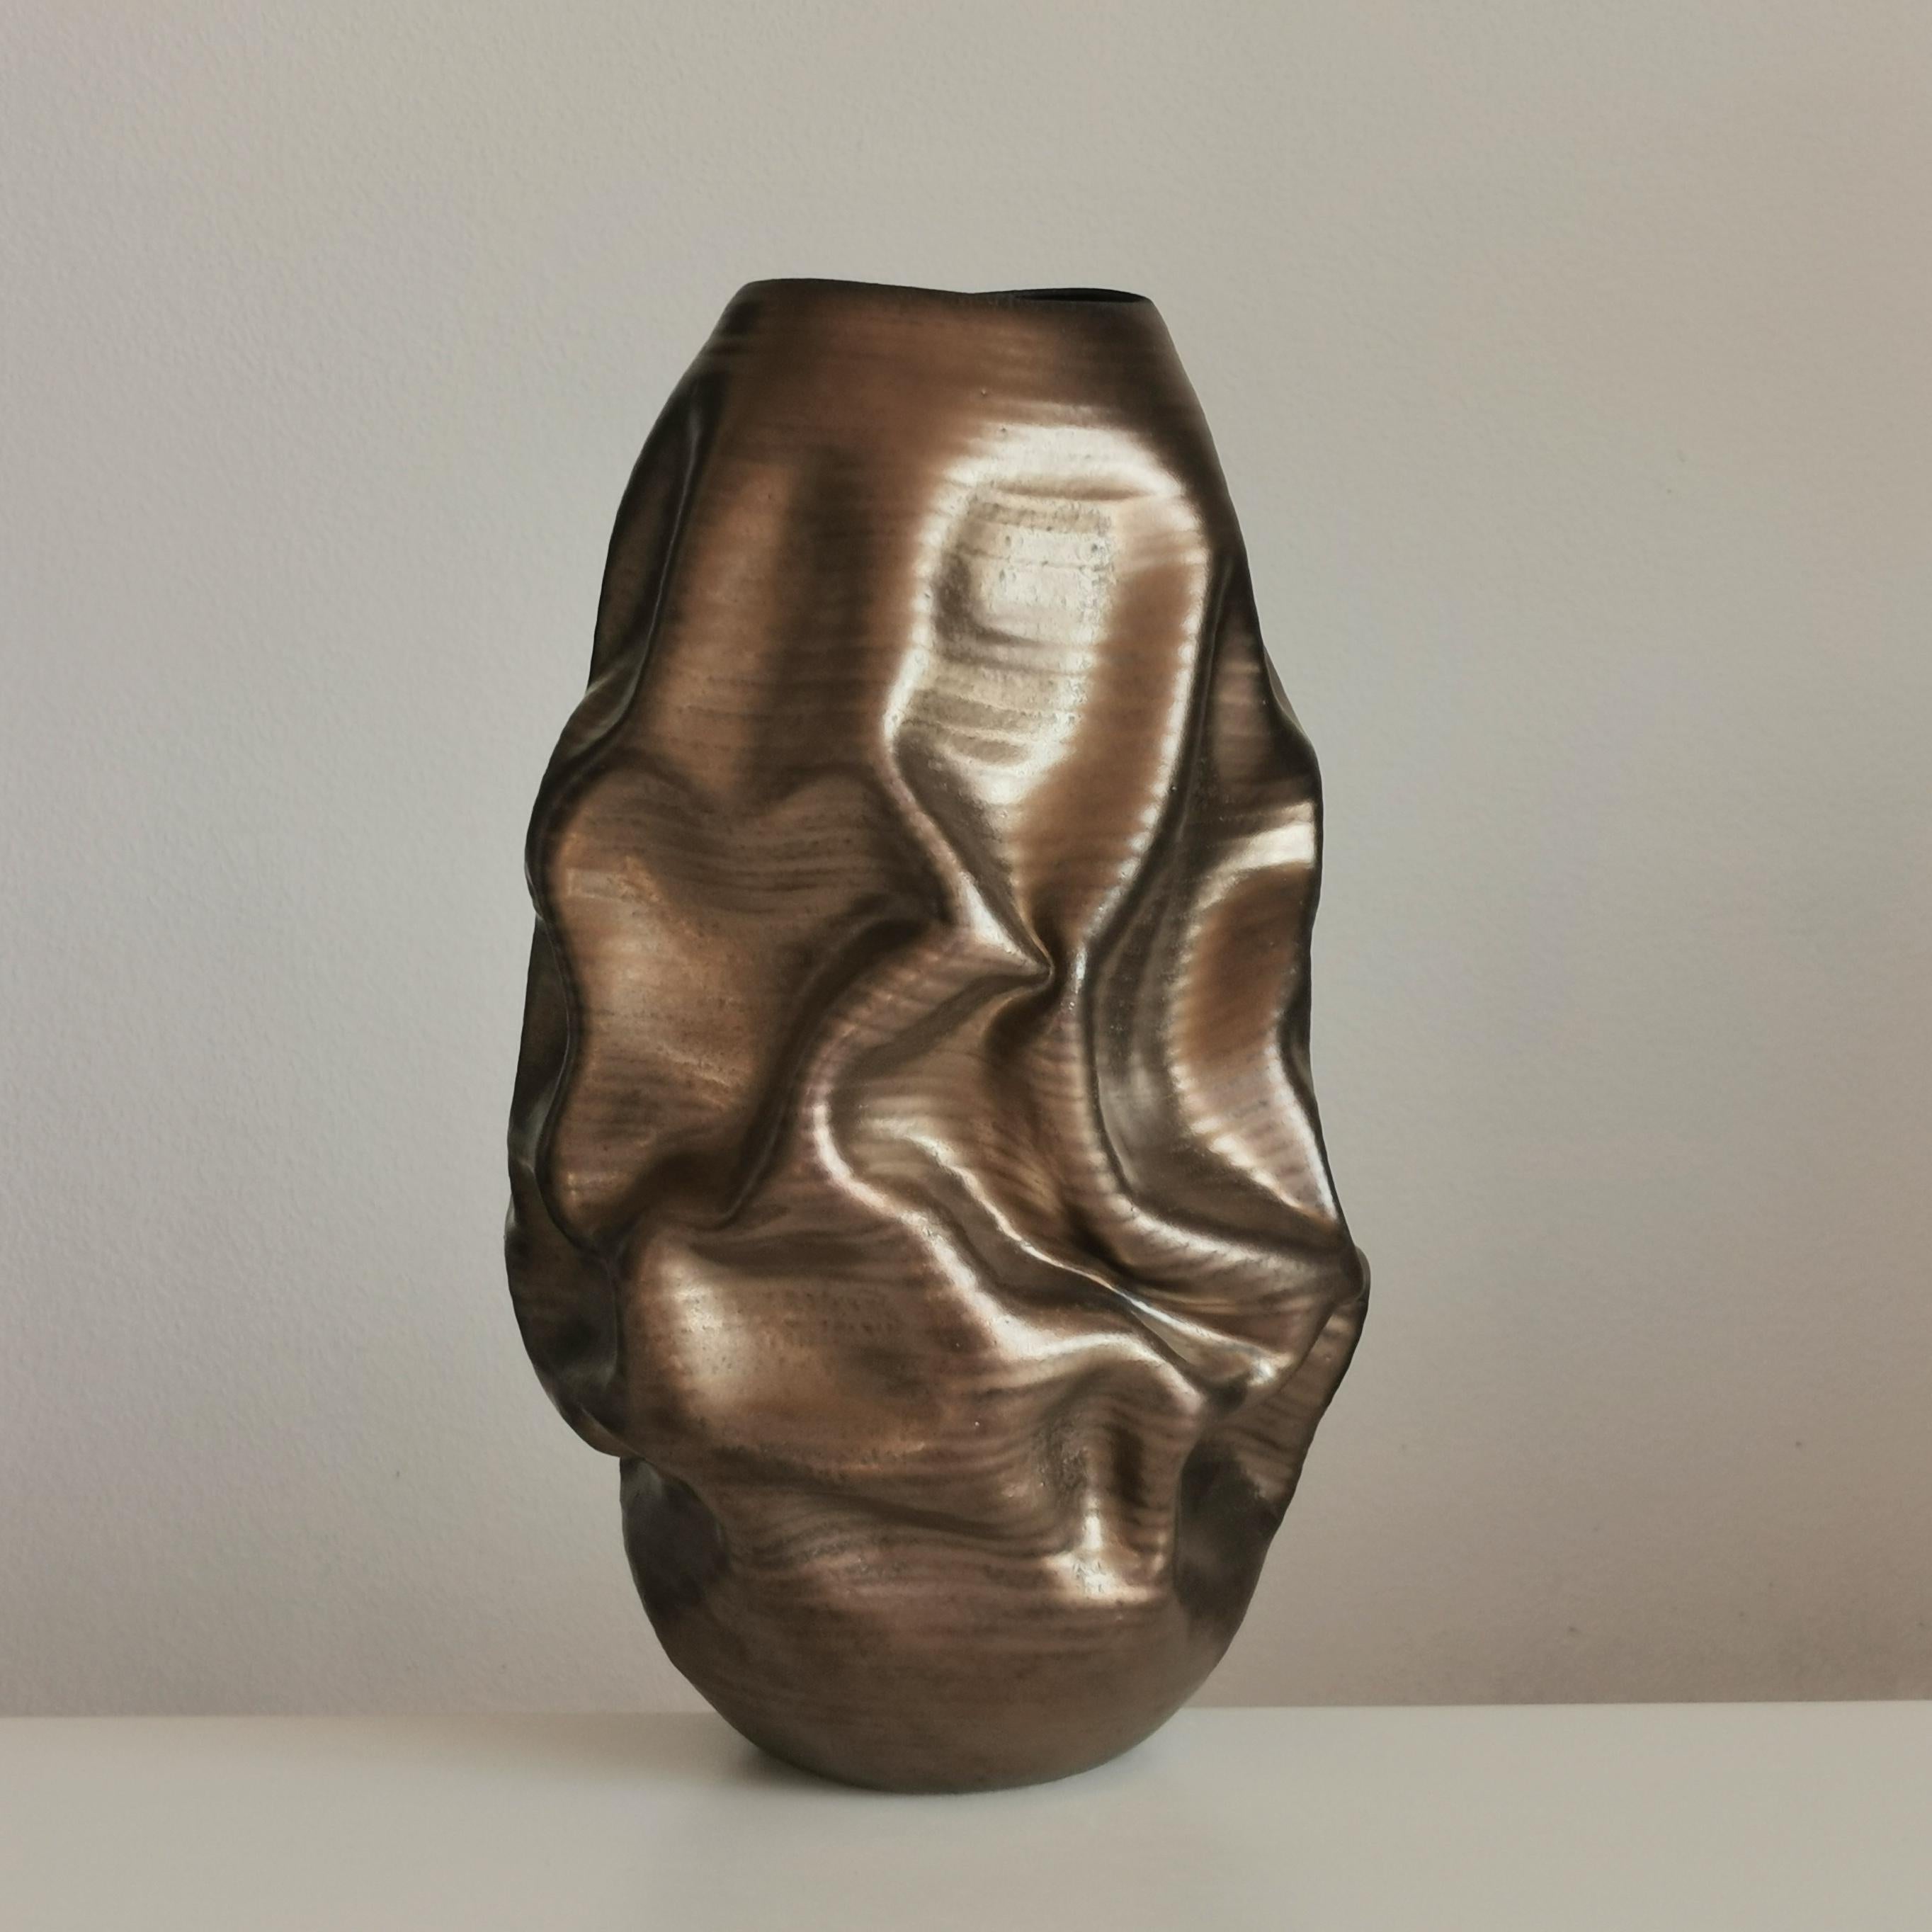 Tall Golden Crumpled Form N.97, Medium Ceramic Sculpture, Objet D'Art 3